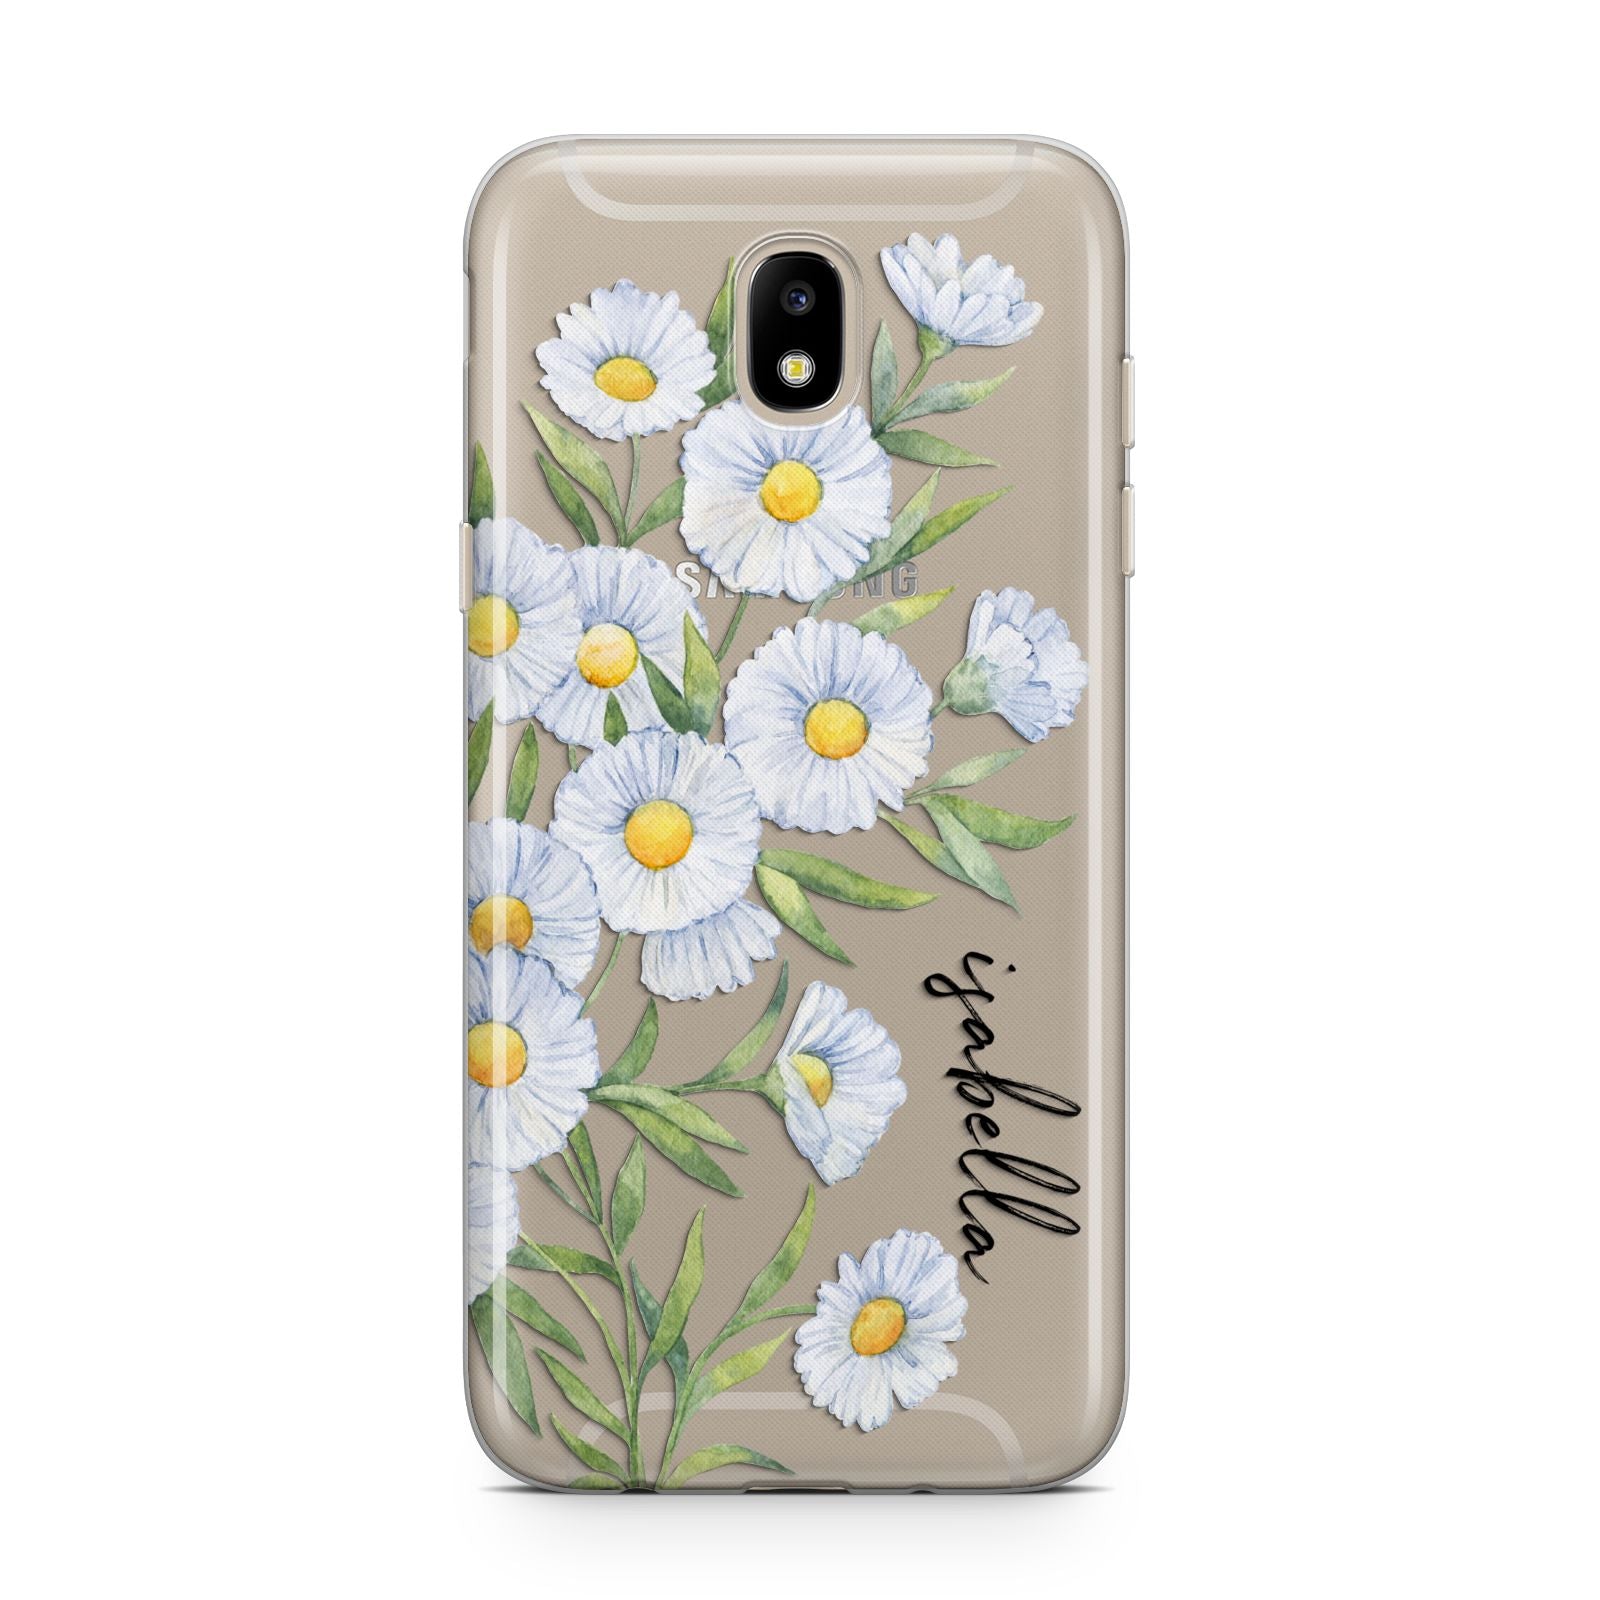 Personalised Daisy Flower Samsung J5 2017 Case